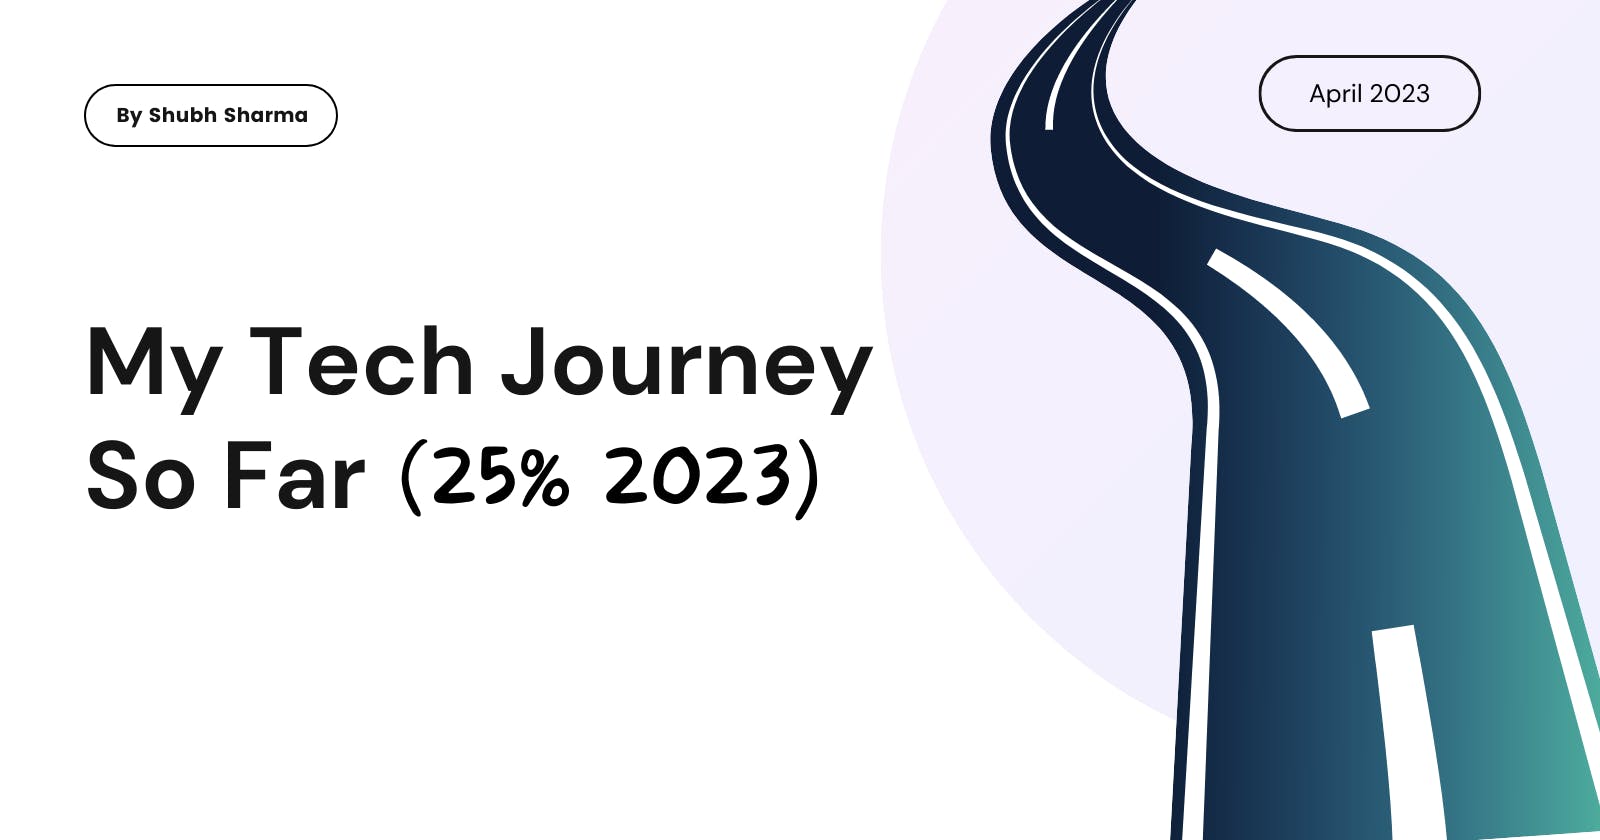 My Tech Journey So Far (25% of 2023)